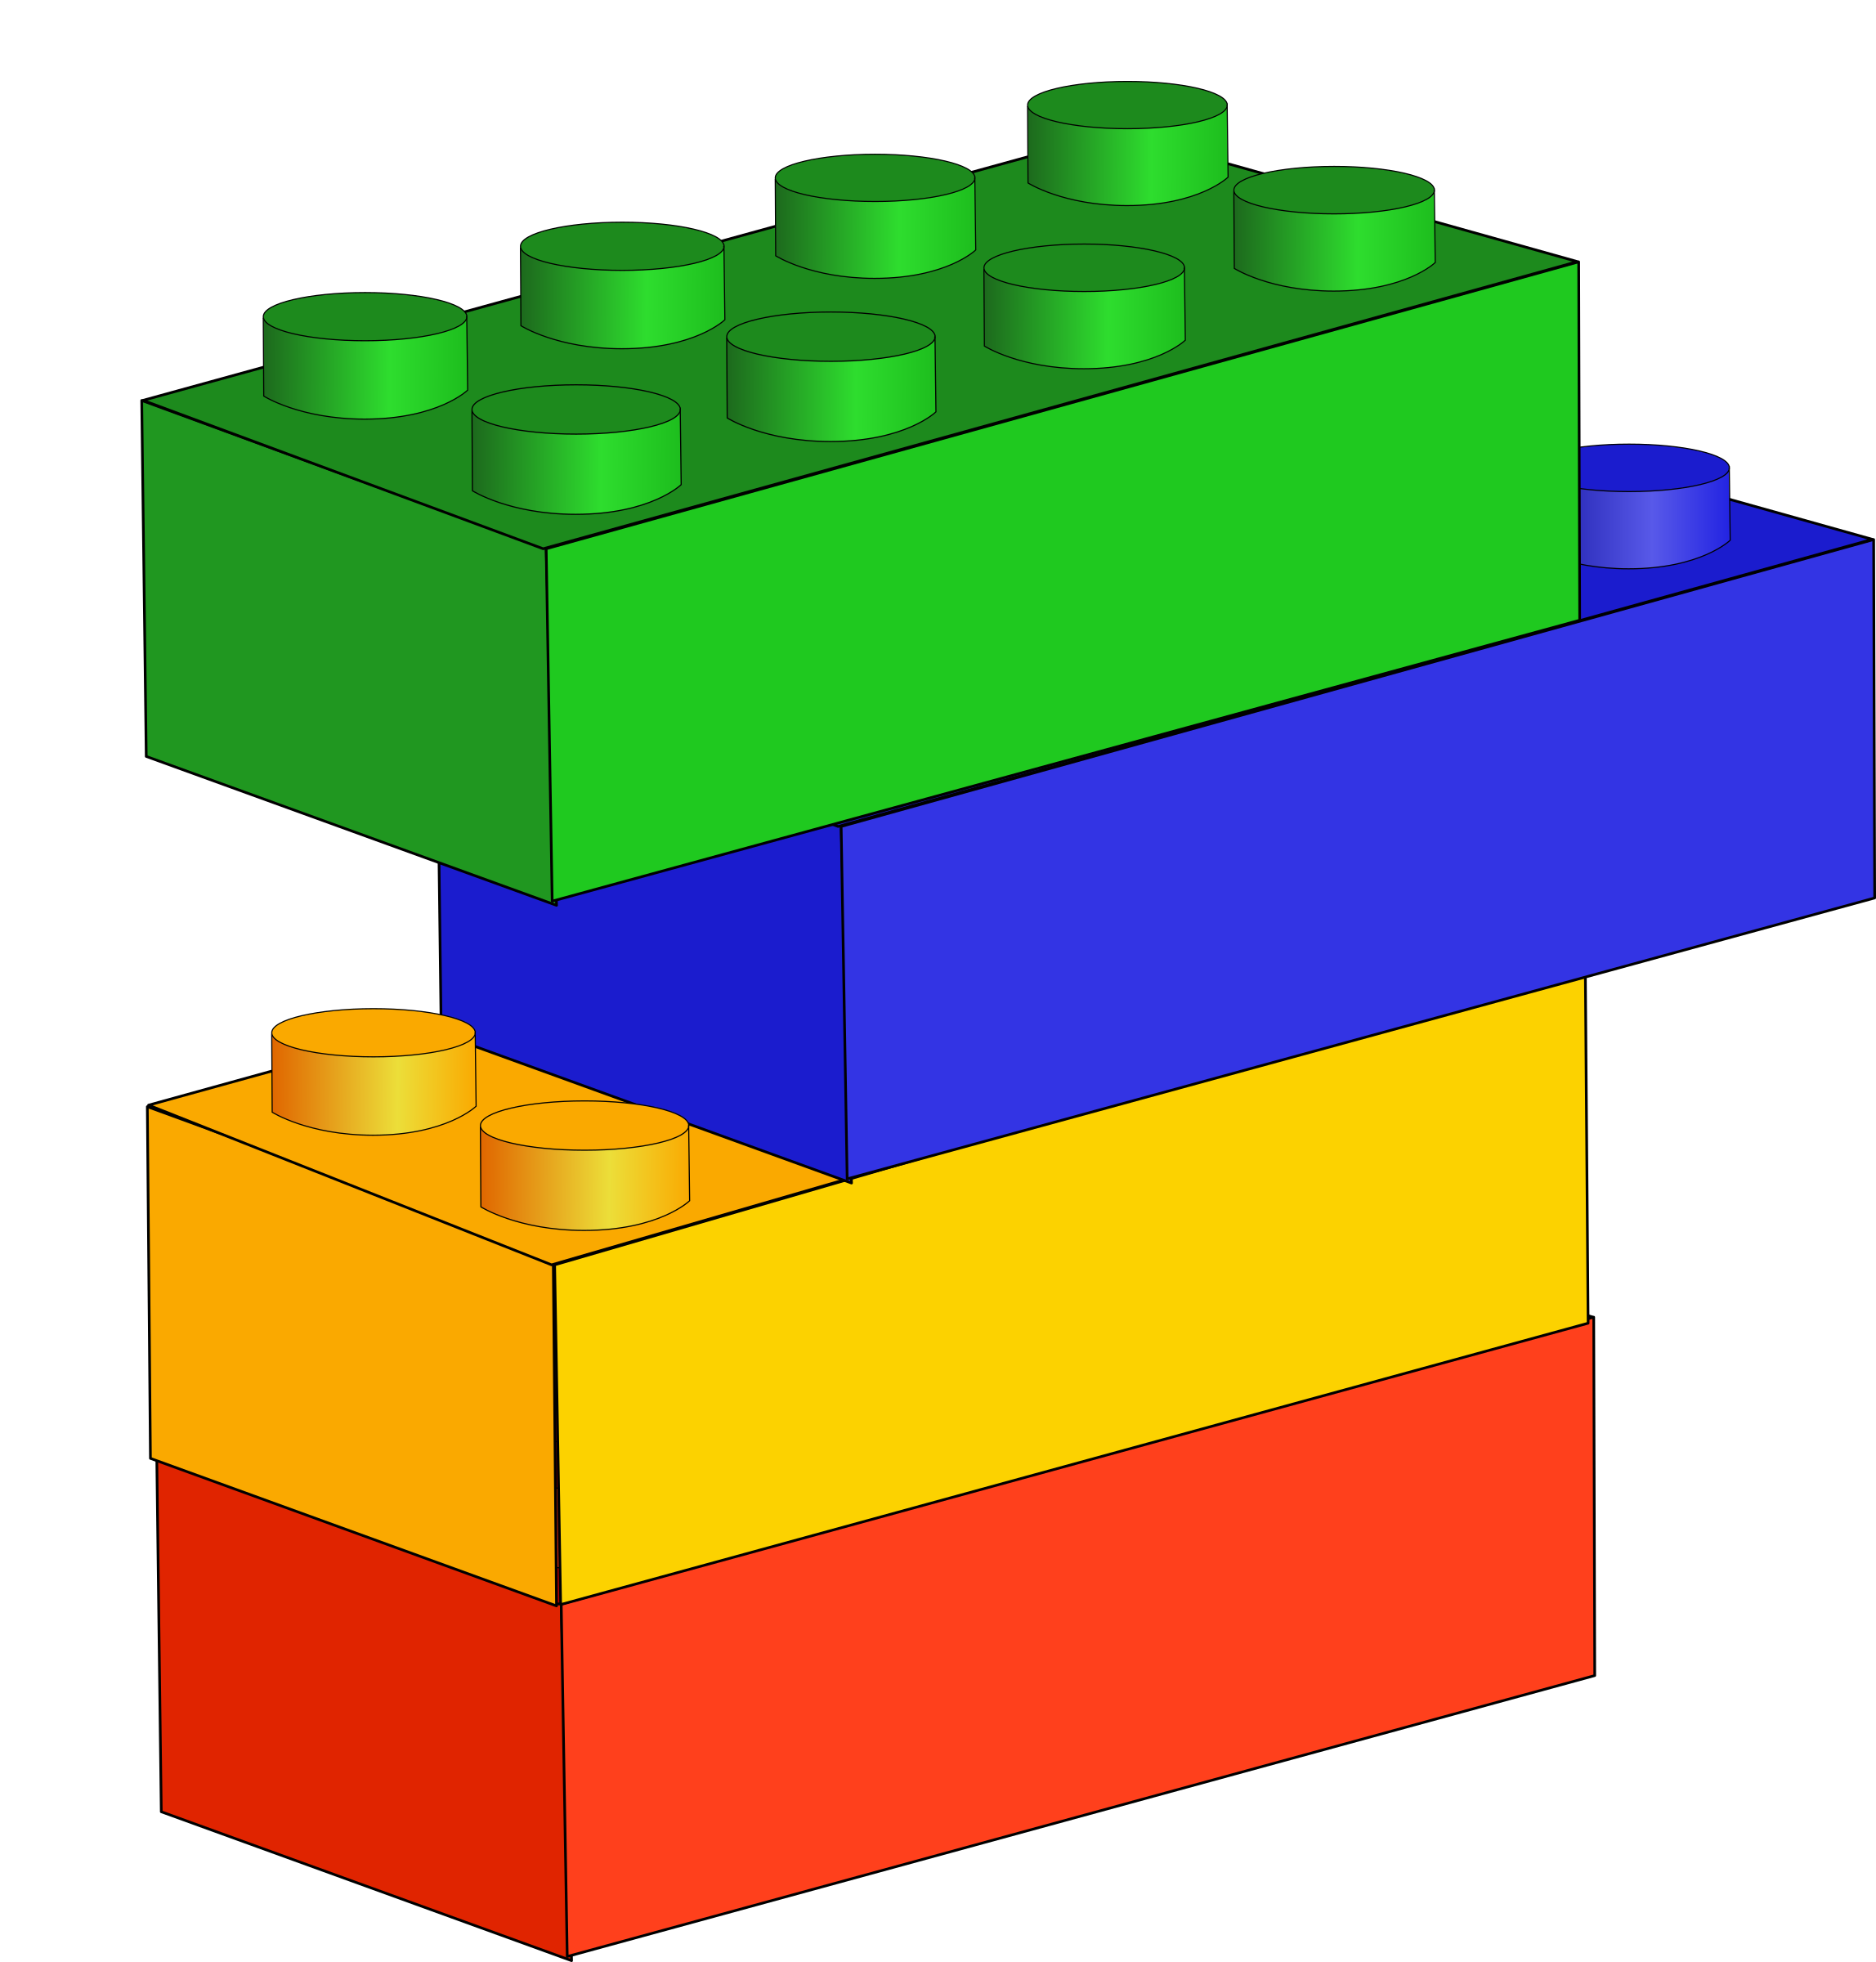 Lego building blocks clipart